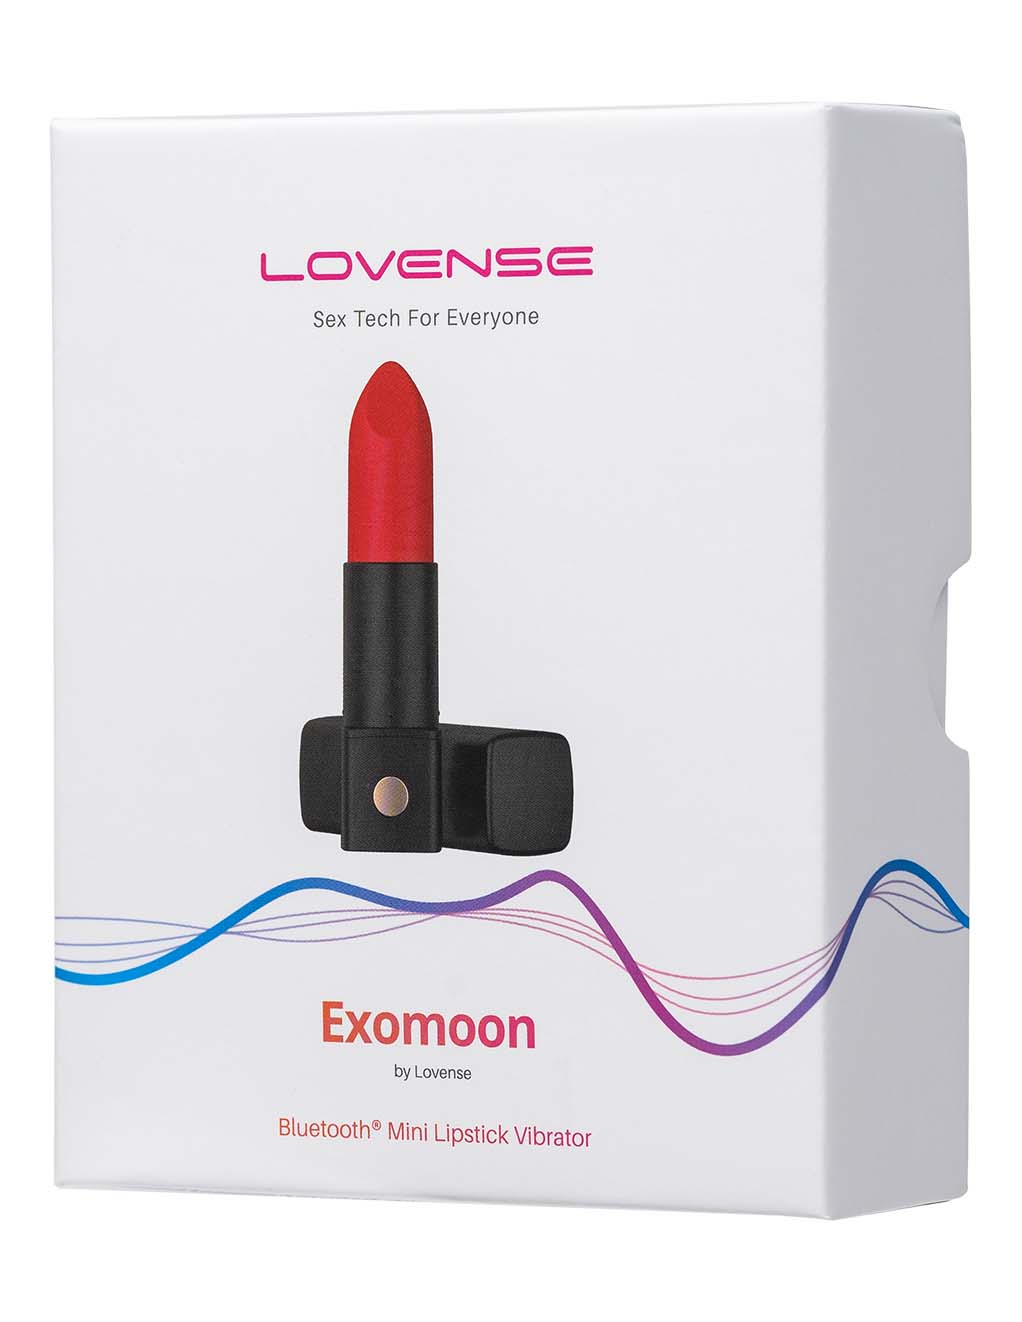 Lovense Exomoon- BOx Side